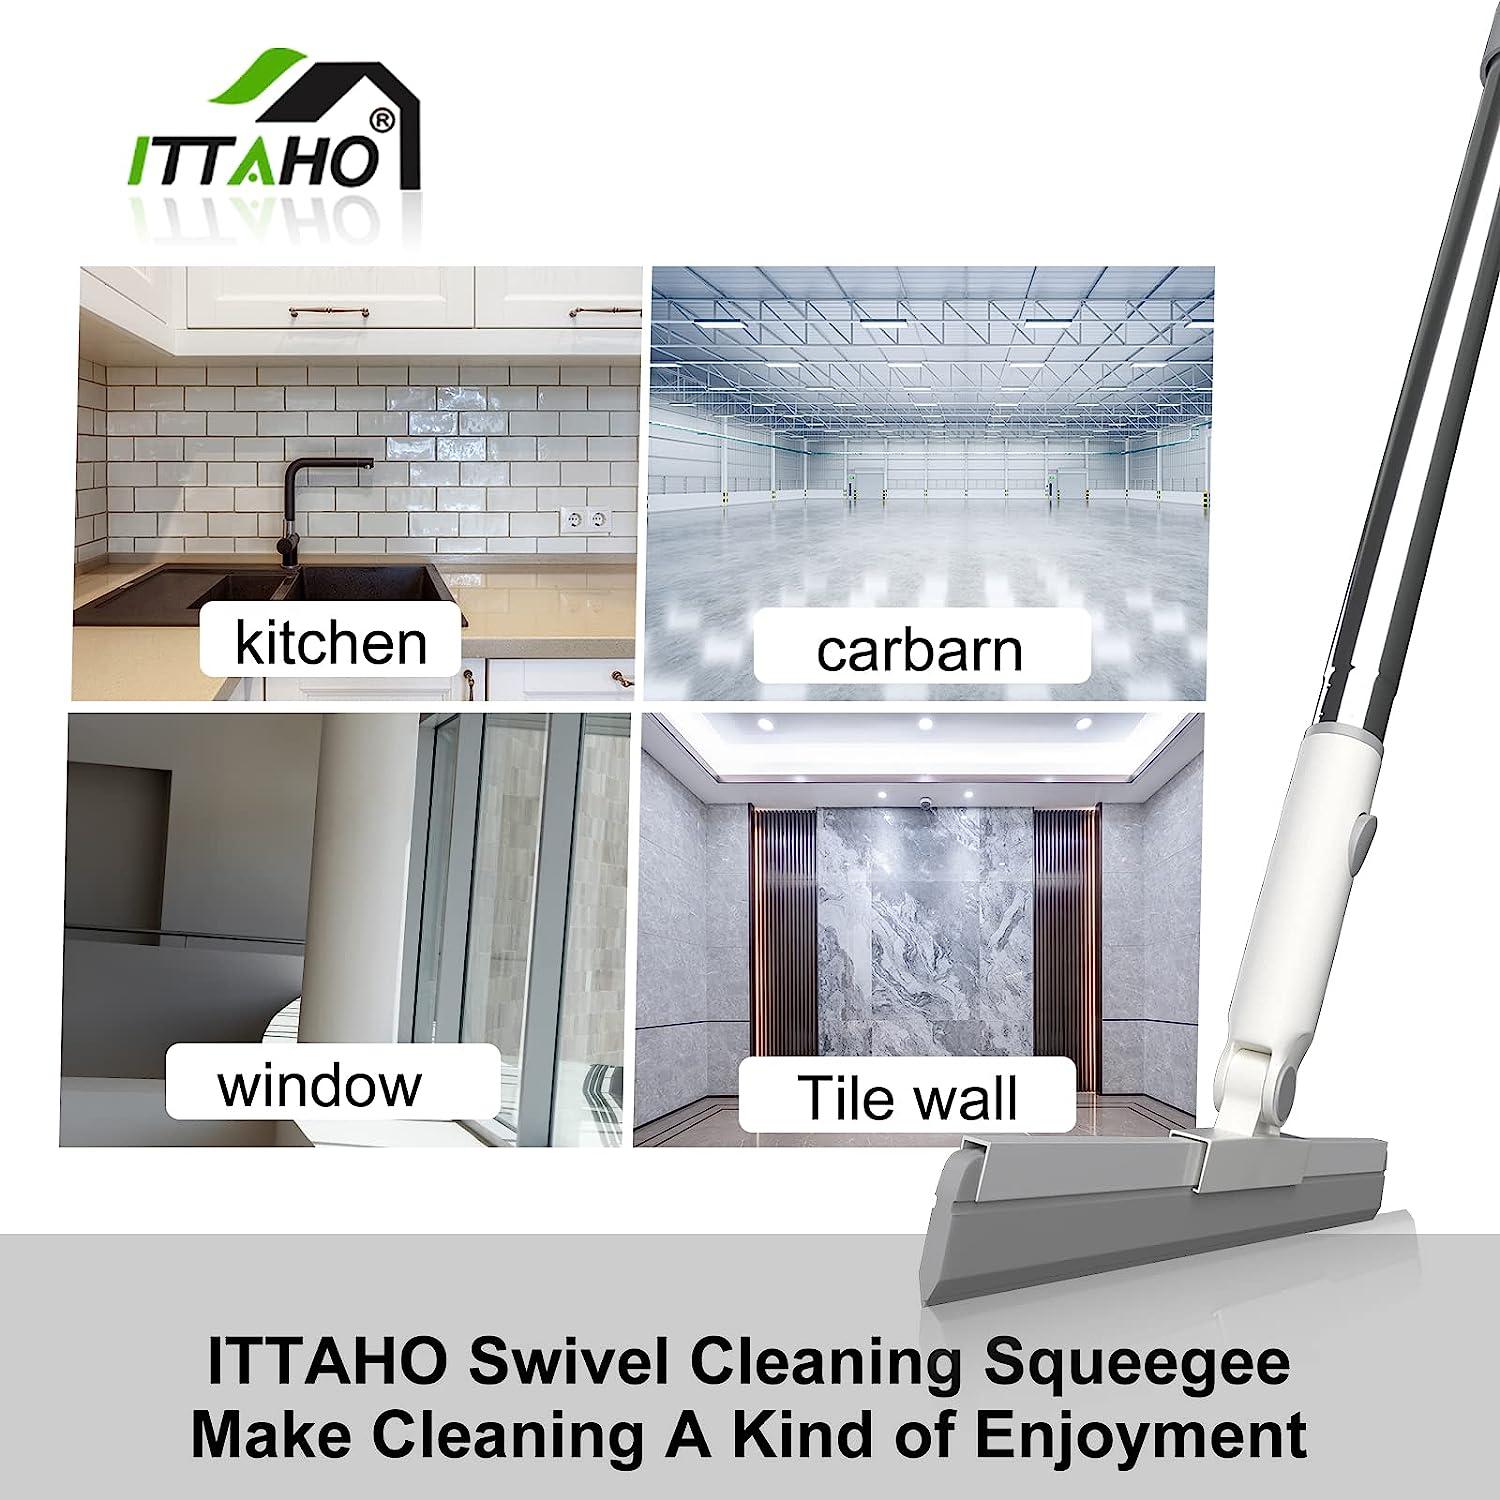 59 Tub Tile Scrubber, ITTAHO Stiff Bristles Cleaning Brush+Sponge wit